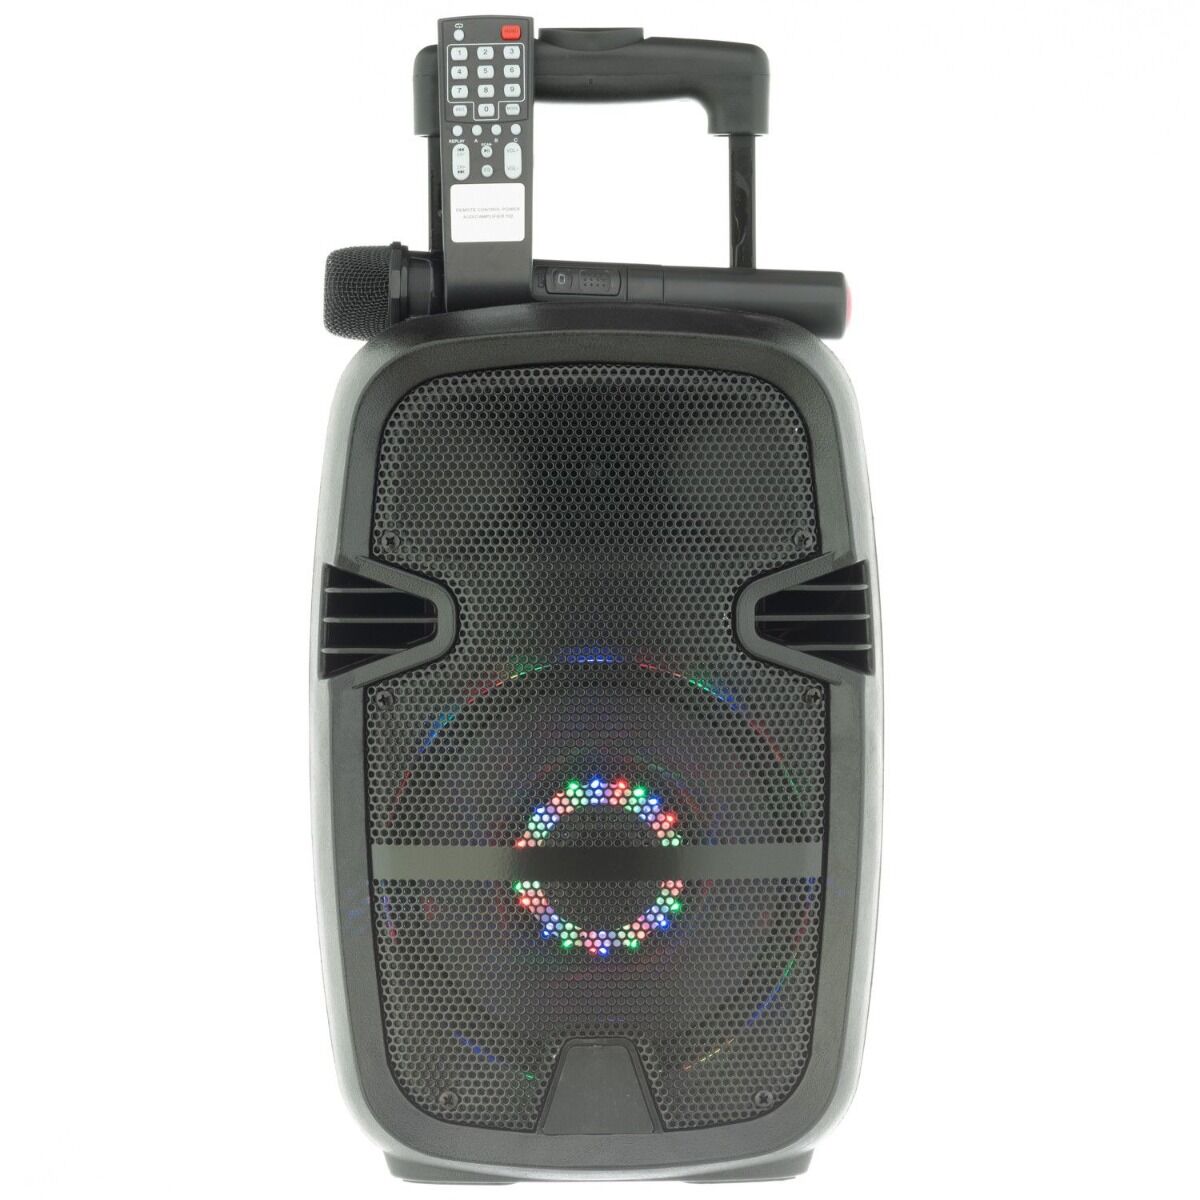 Boxa Activa Portabila Tip Troller Soundvox W-07, Radio FM, Bluetooth, USB, TF Card, Aux, Lumini LED, Microfon Inclus, Telecomanda, Neagra